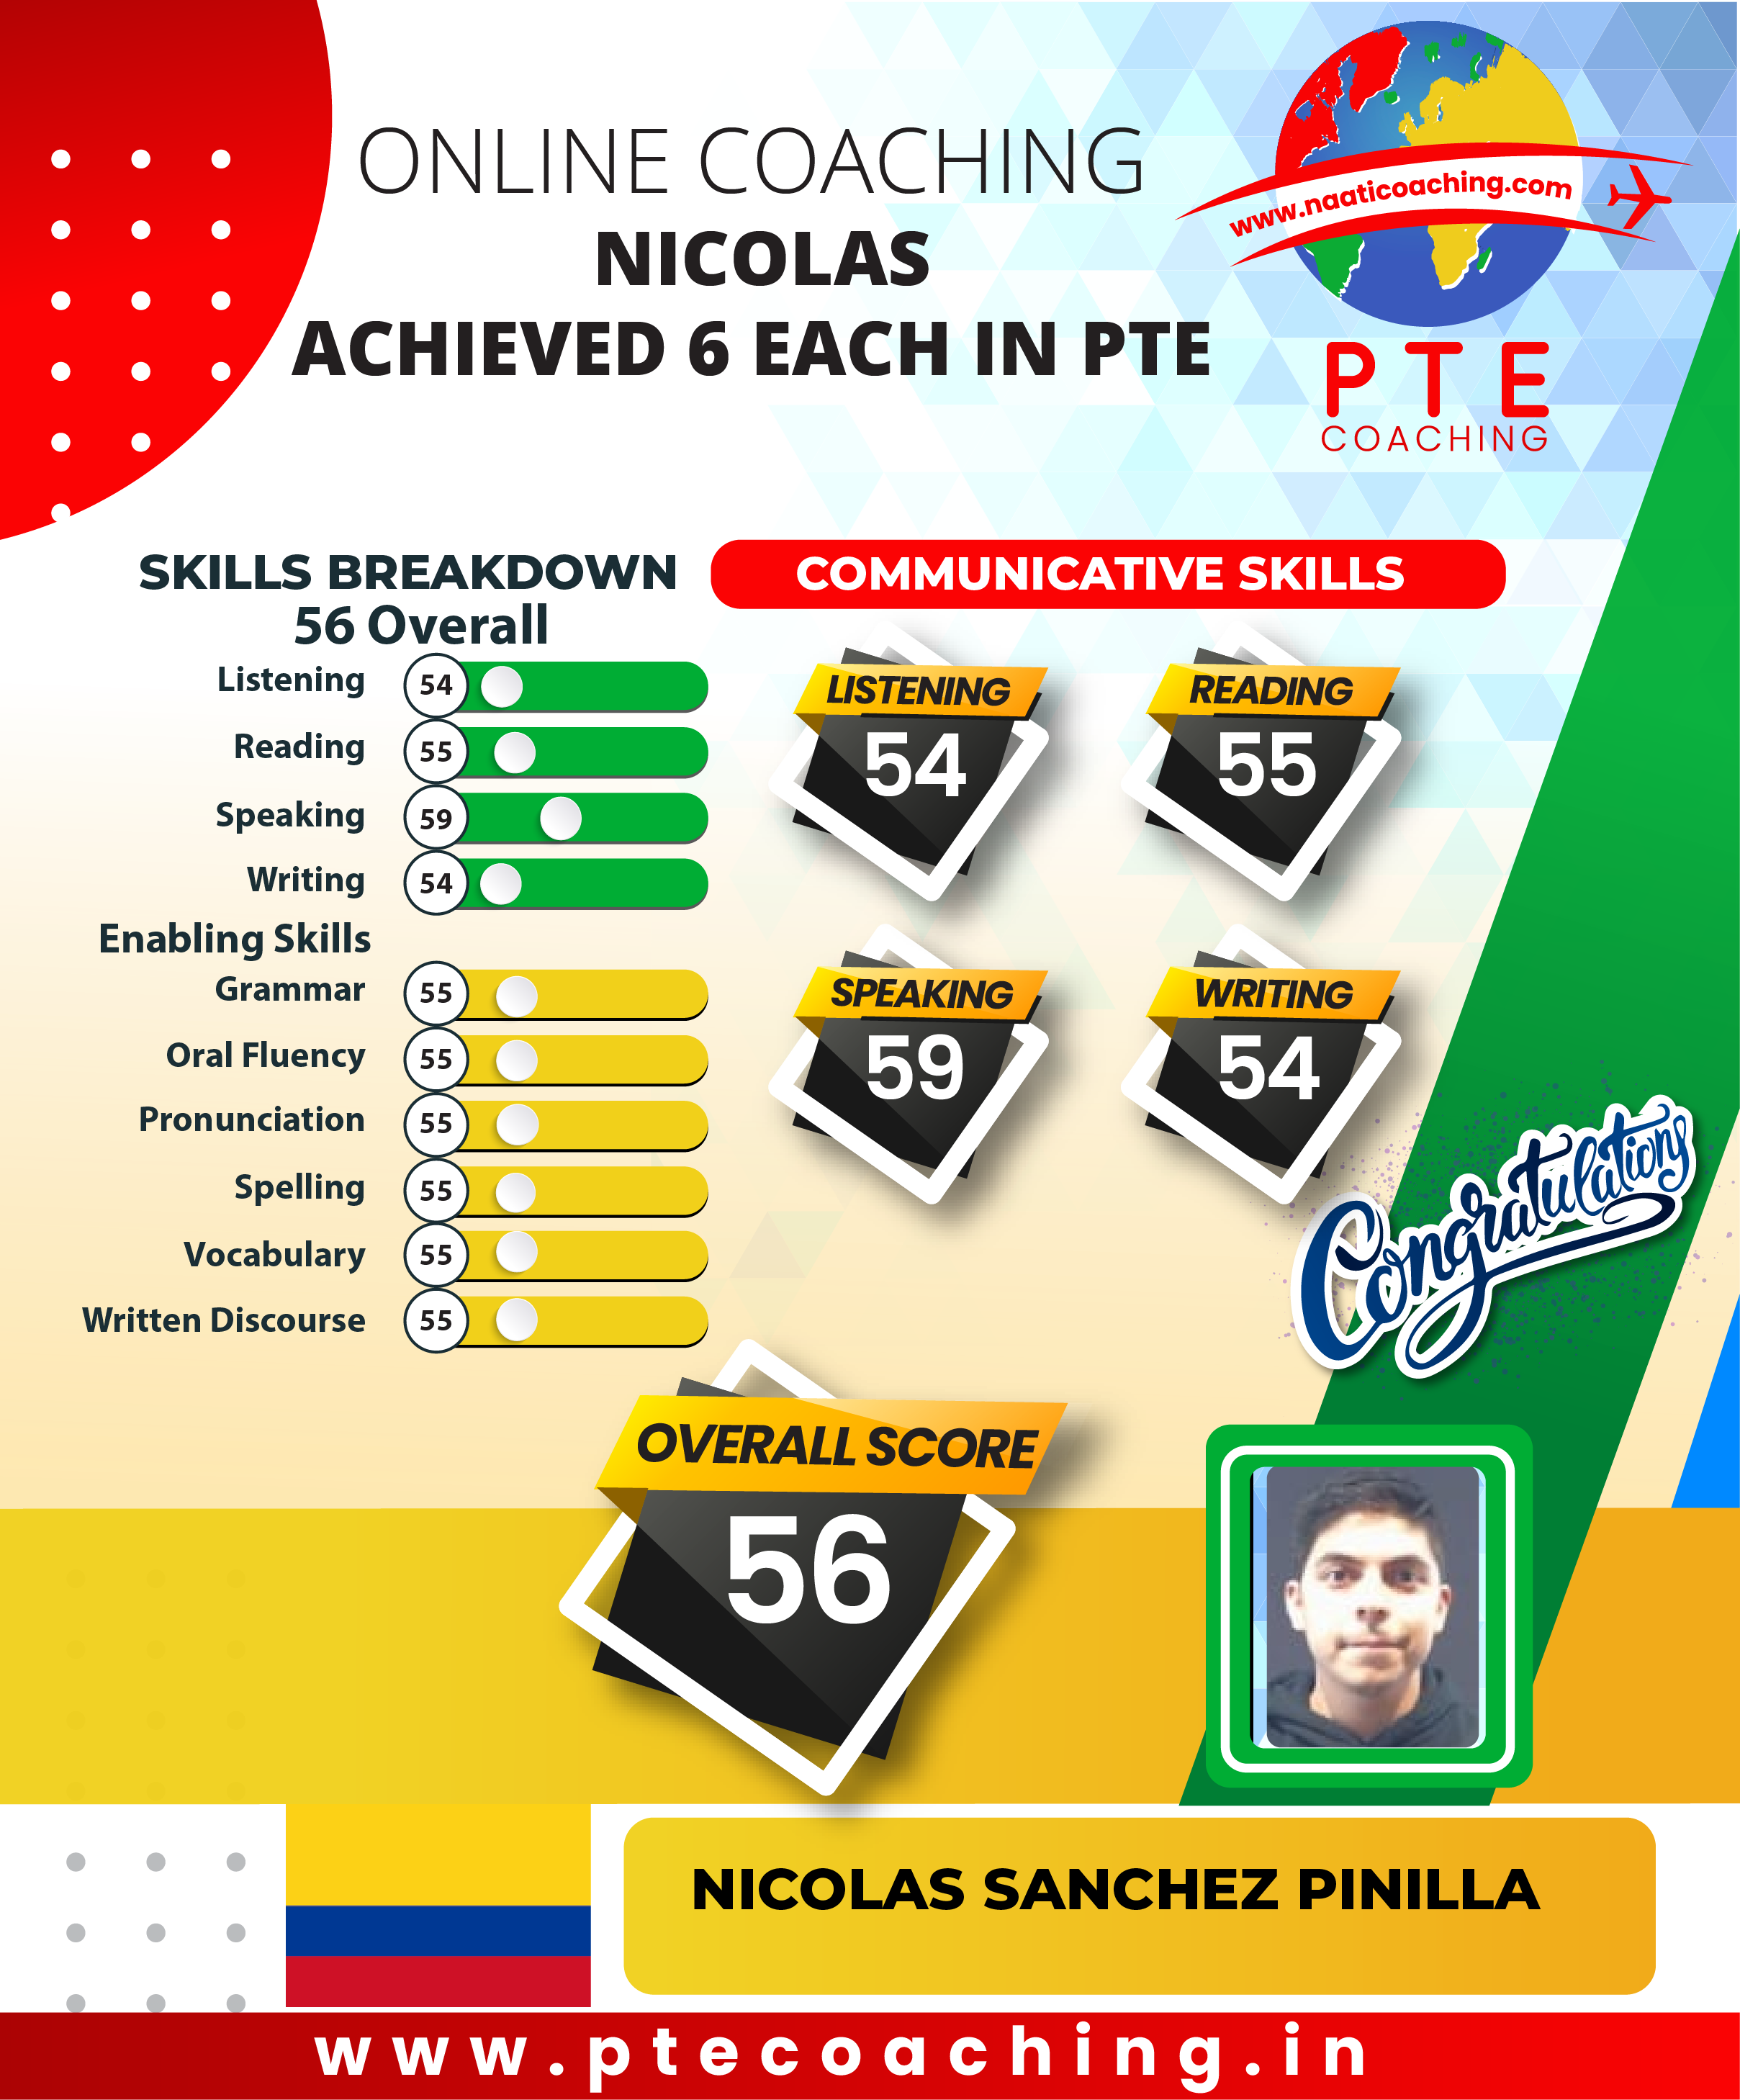 PTE Coaching Scorecard - Nicolas achieved 6 each in PTE